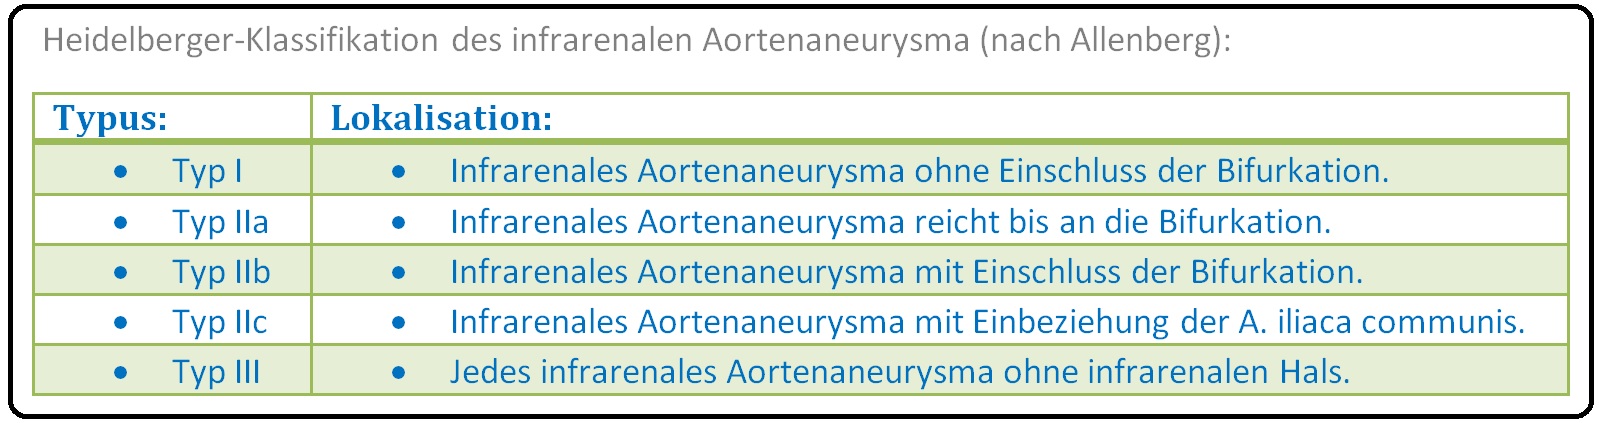 644 Heidelberger Klassifikation des infrarenalen Aortenaneurysma